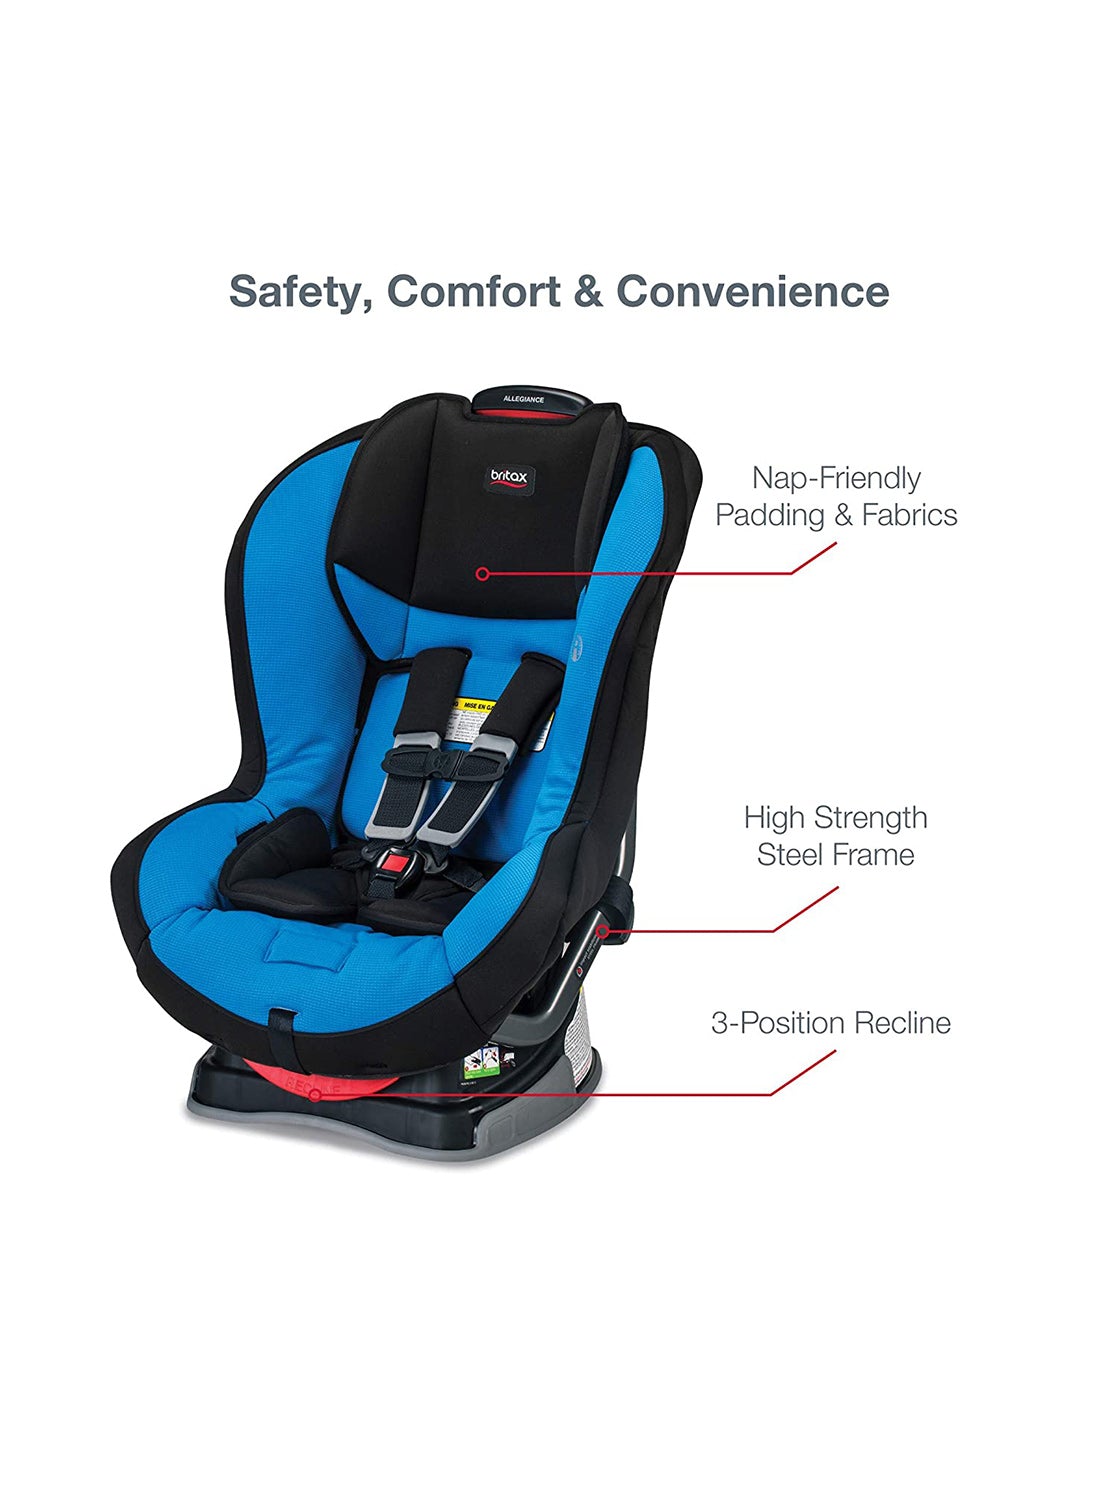 BRITAX Allegiance Convertible Car Seat, -- ANB Baby